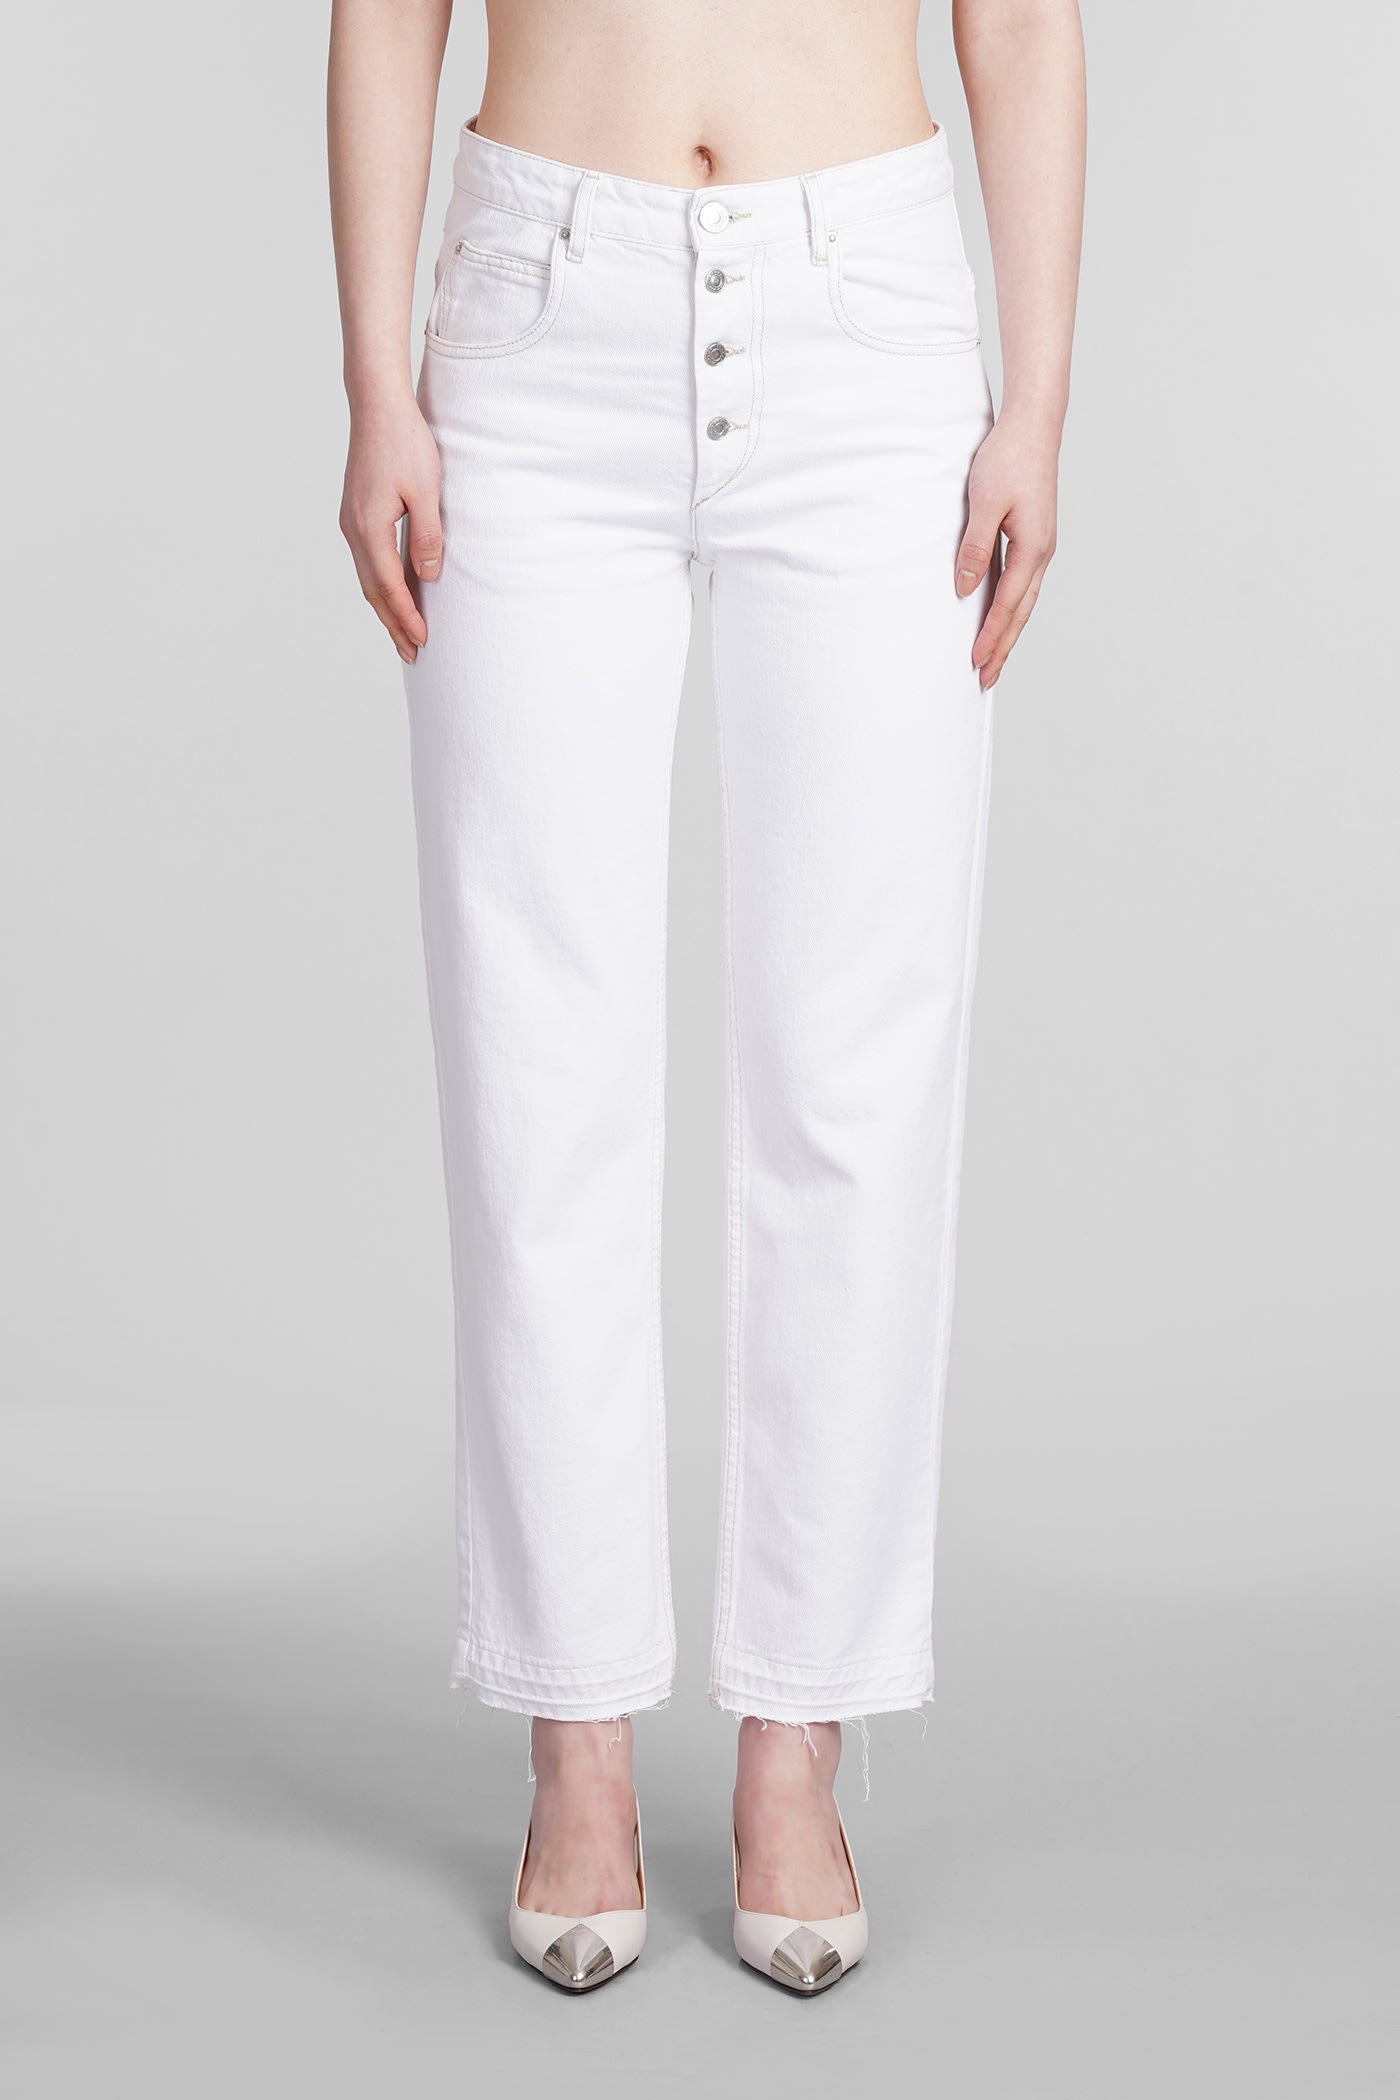 Isabel Marant Jemina Jeans In White Cotton